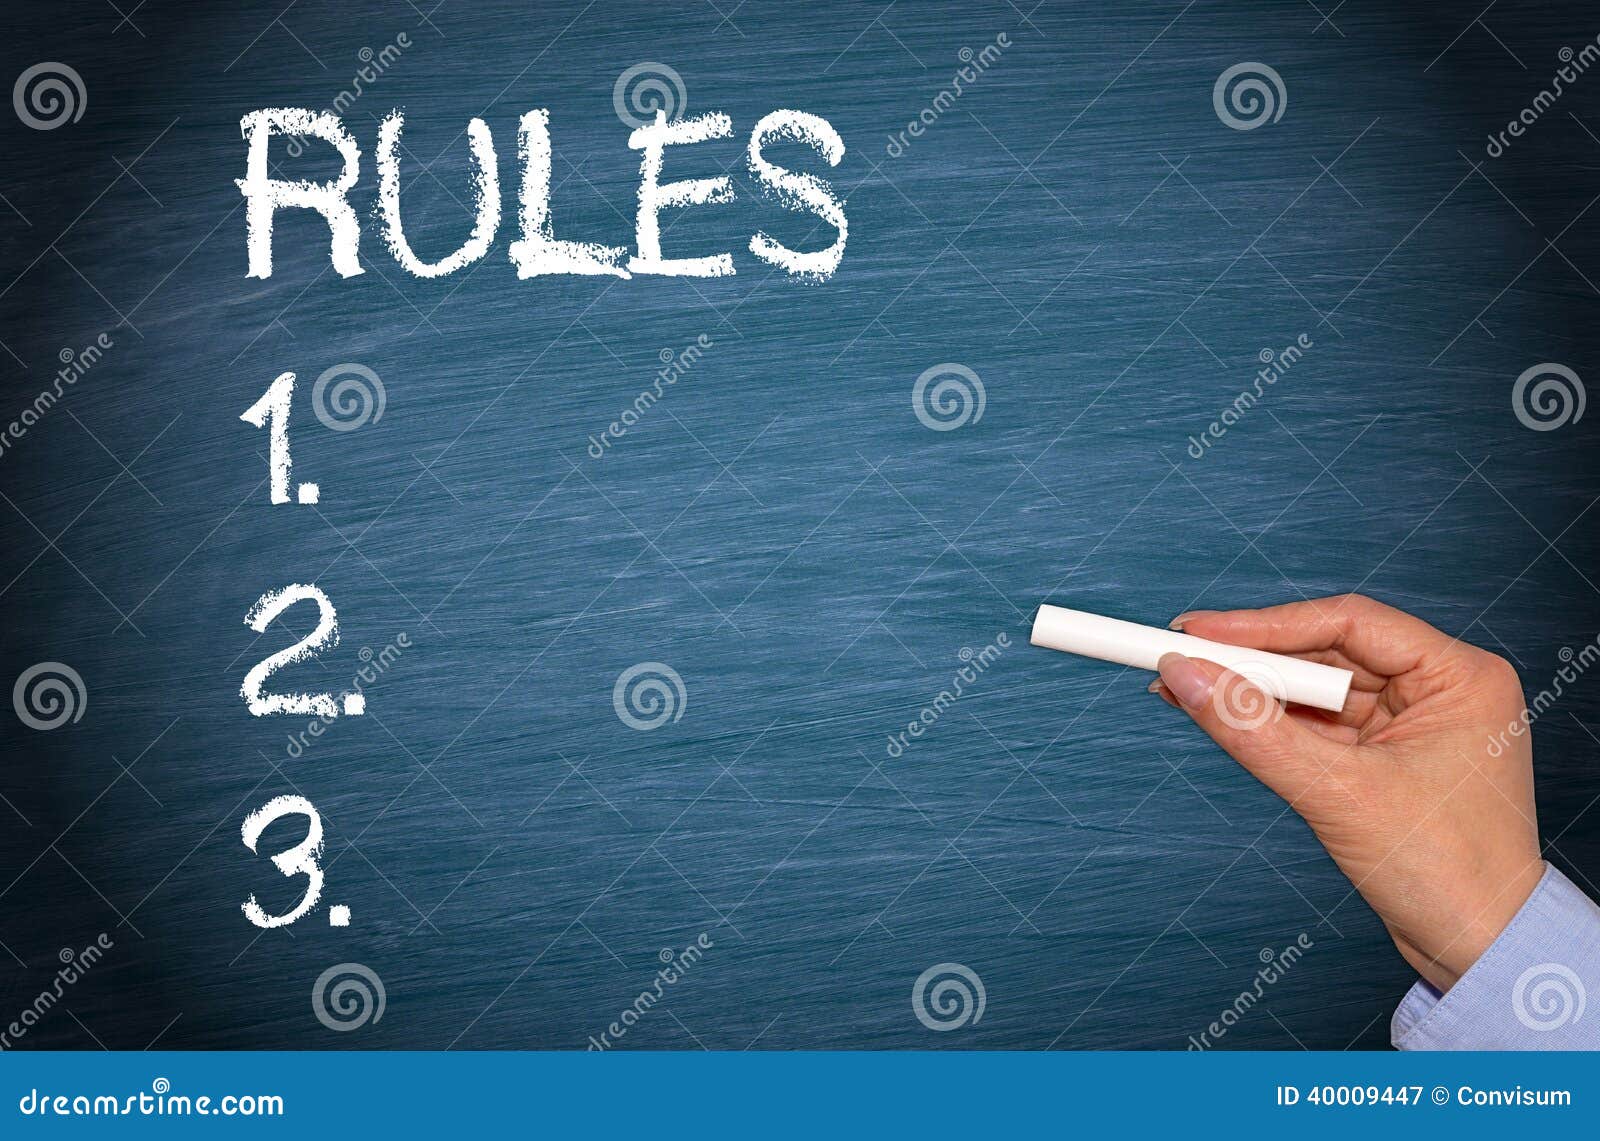 three rules